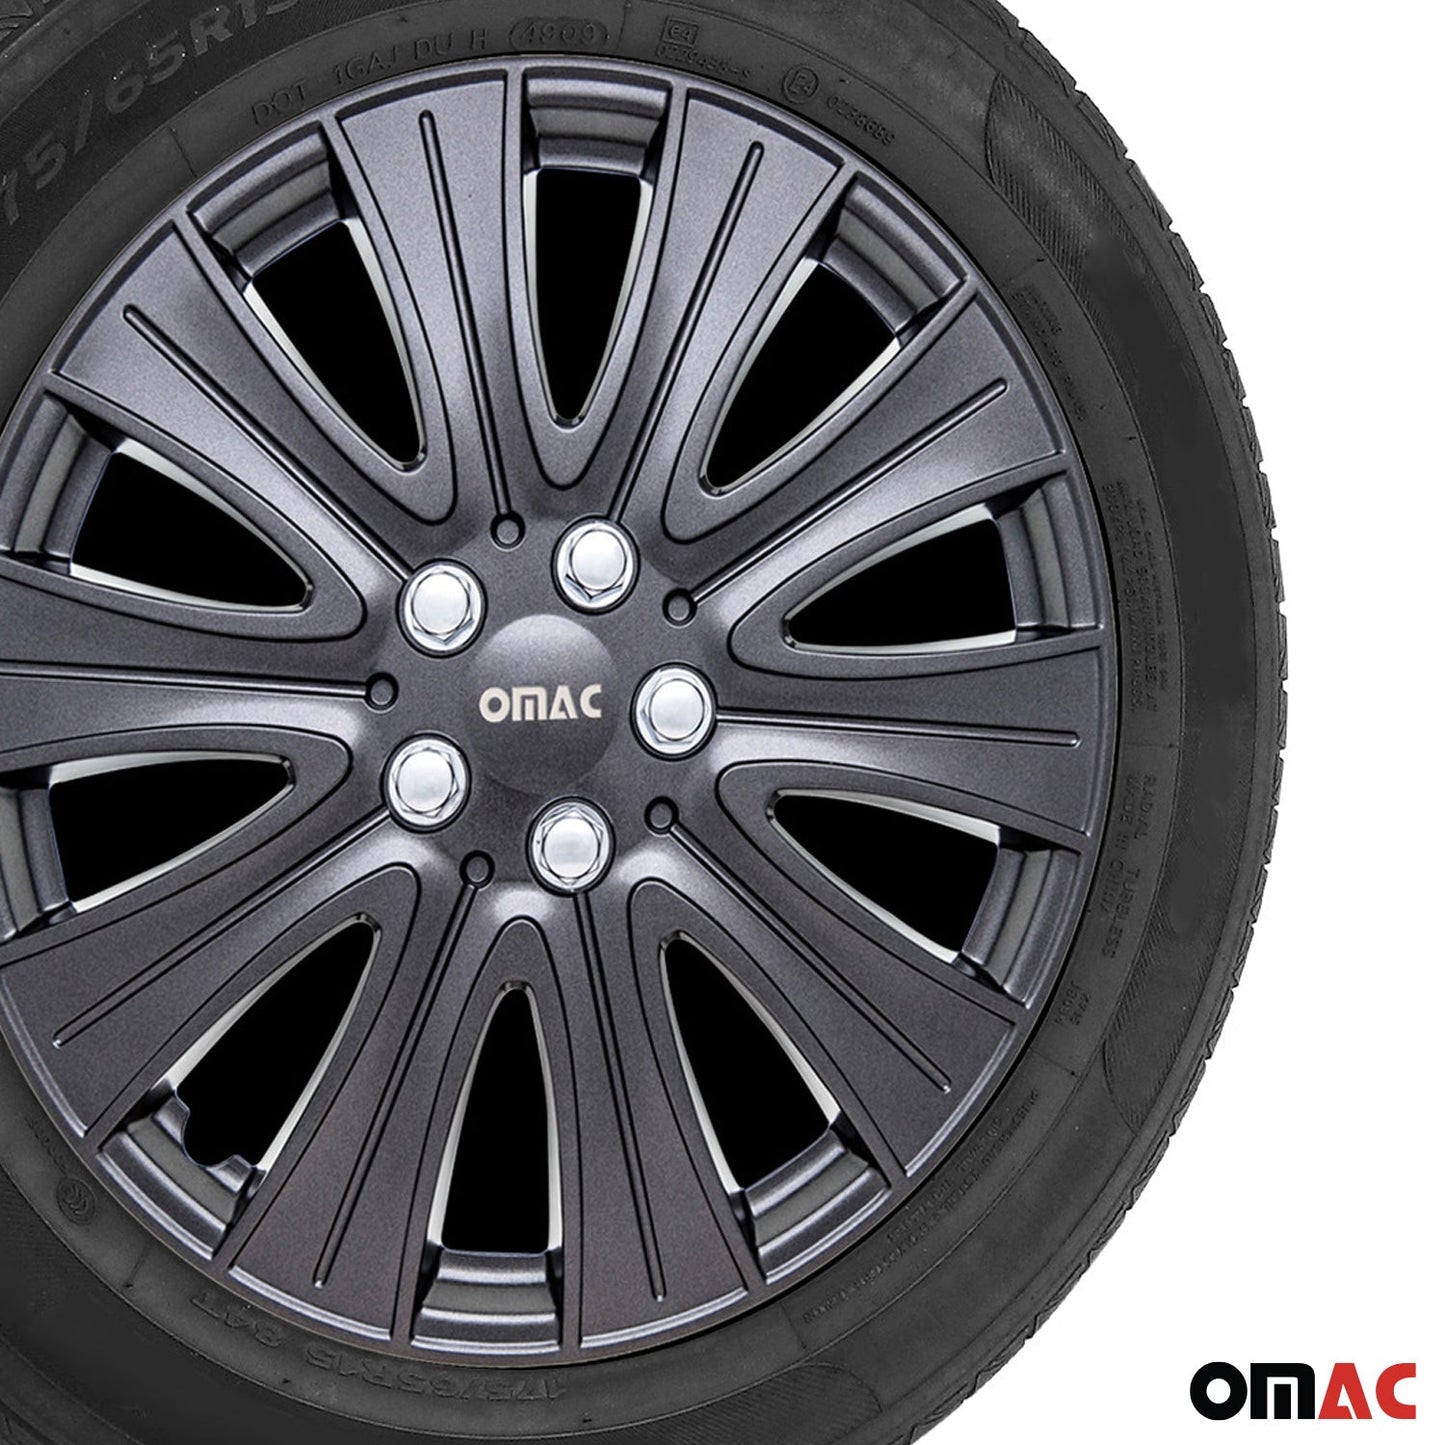 OMAC 15" Wheel Covers Guard Hub Caps Durable Snap On ABS Metal Silver 4x OMAC-WE40-GM15